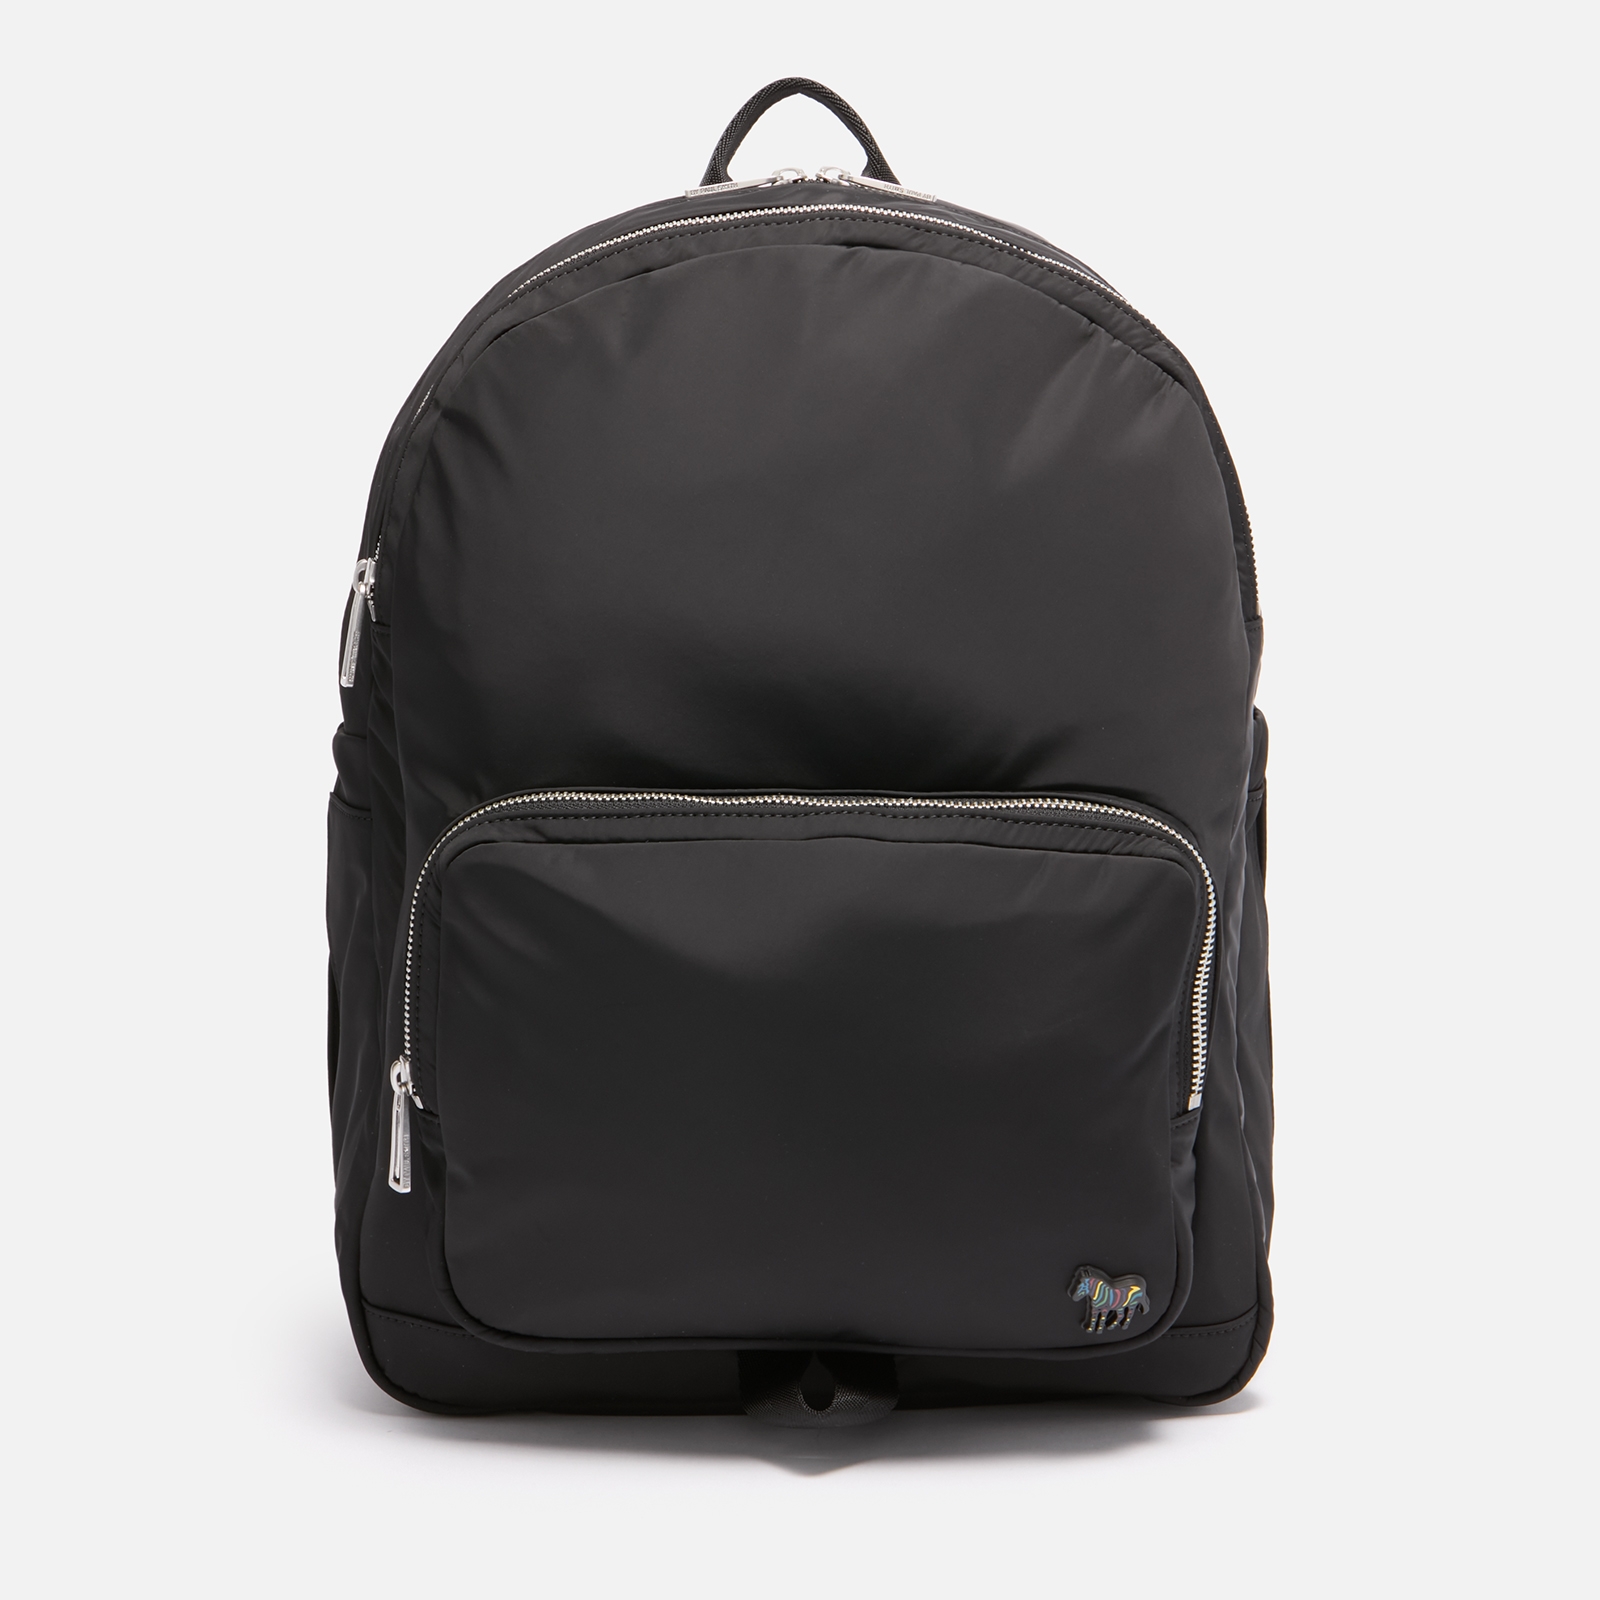 PS Paul Smith Men's Backpack - Black